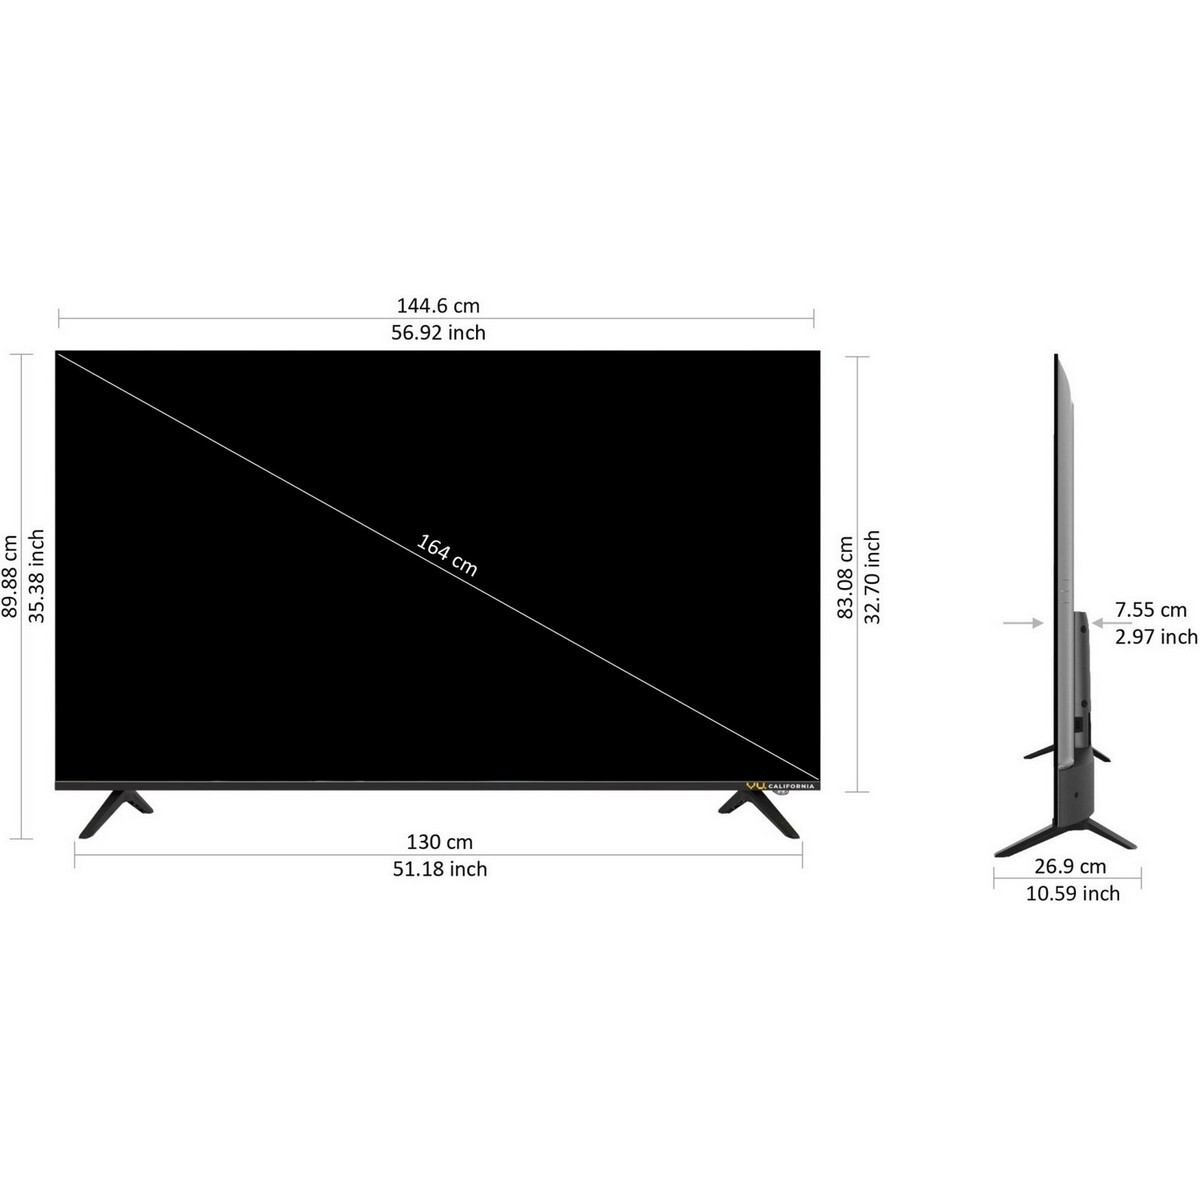 VU 4K Ultra HD Smart LED Google TV 65CA 65"